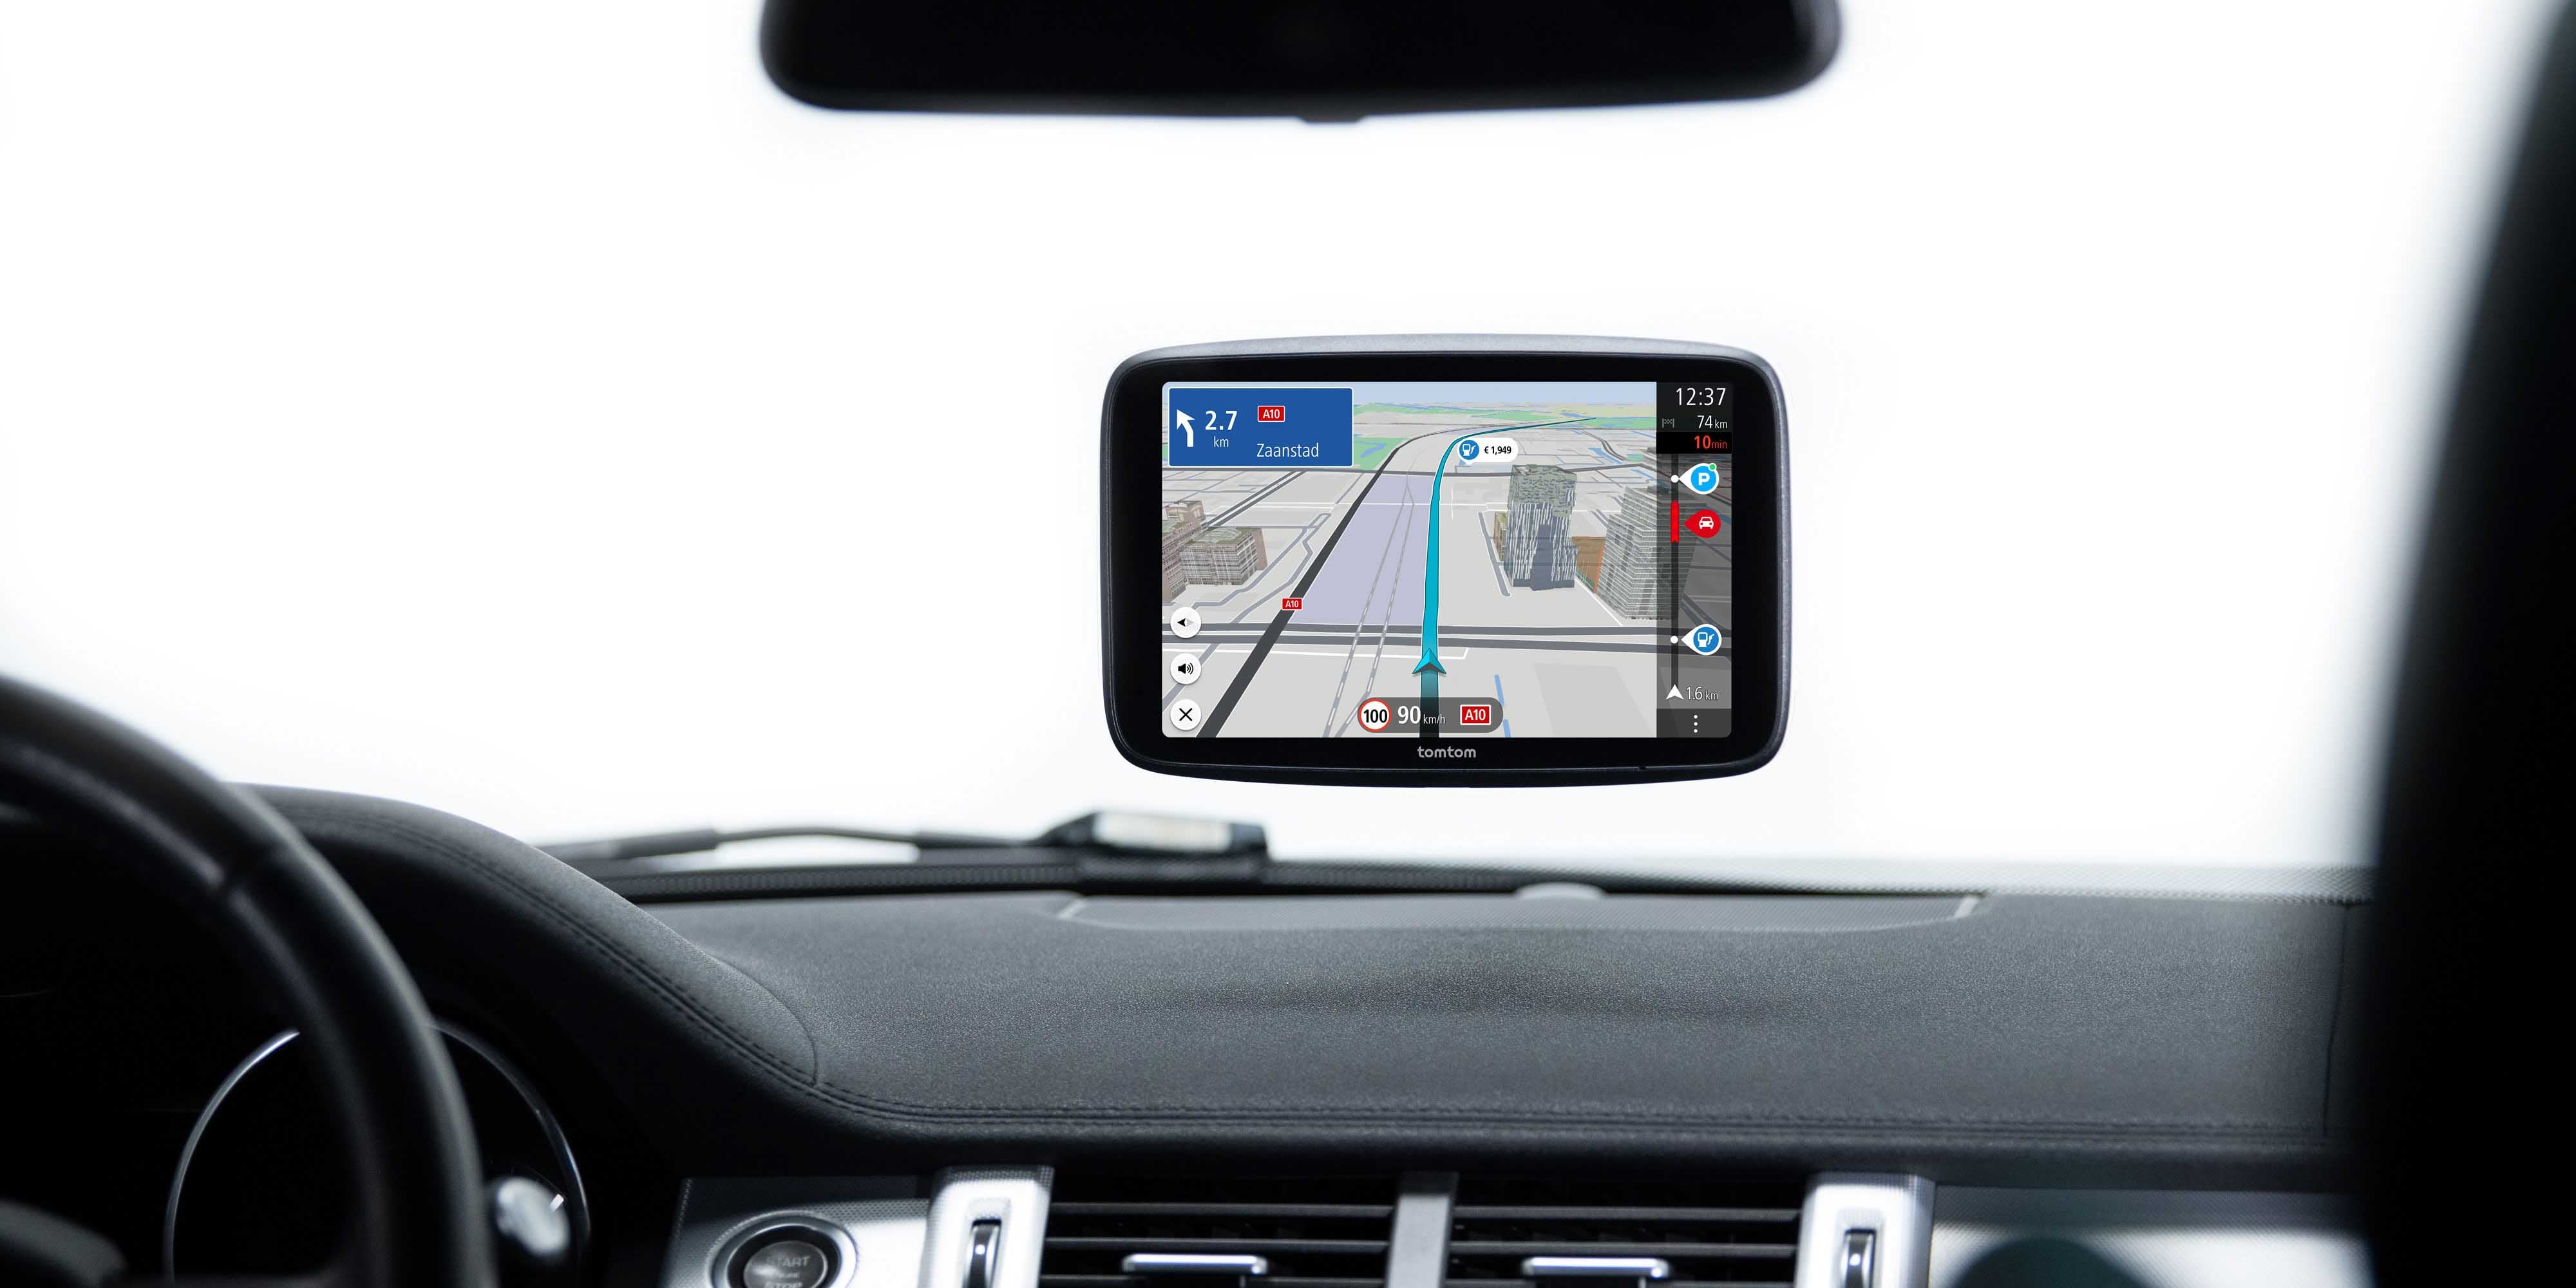 TomTom Car GPS Sat nav mounted on car dashboard